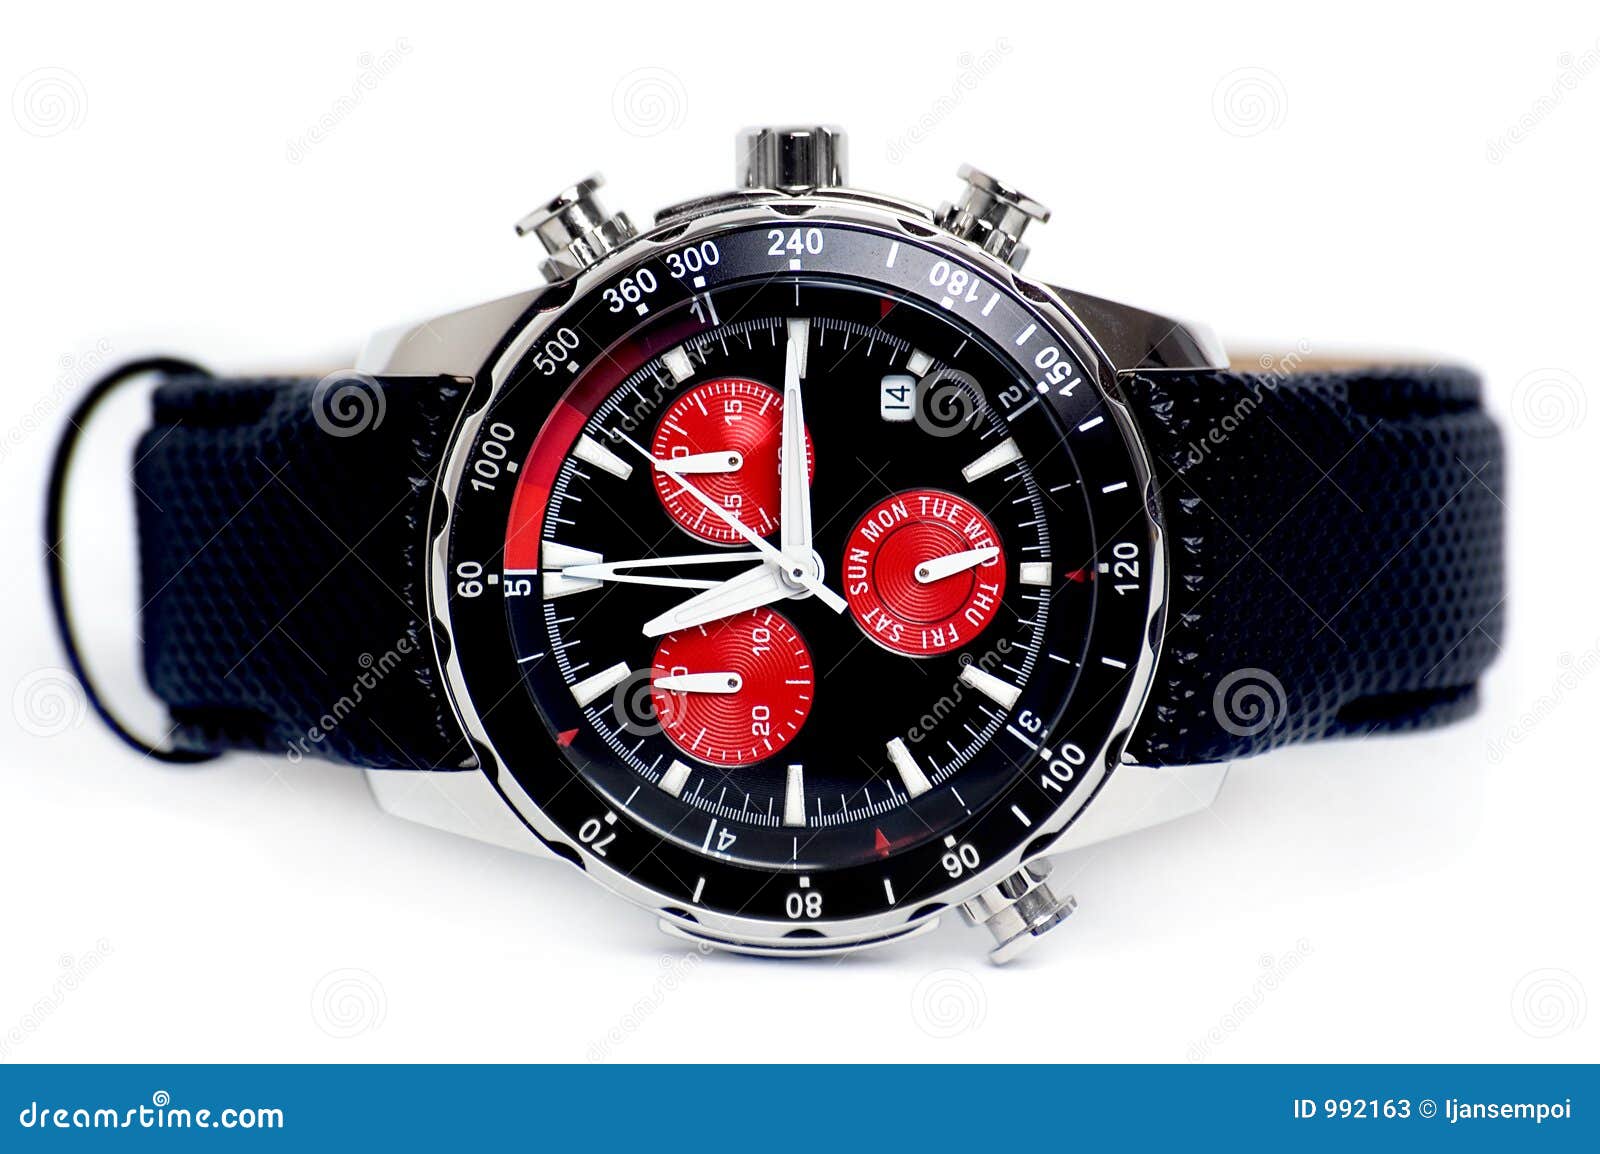 chronography wrist watch